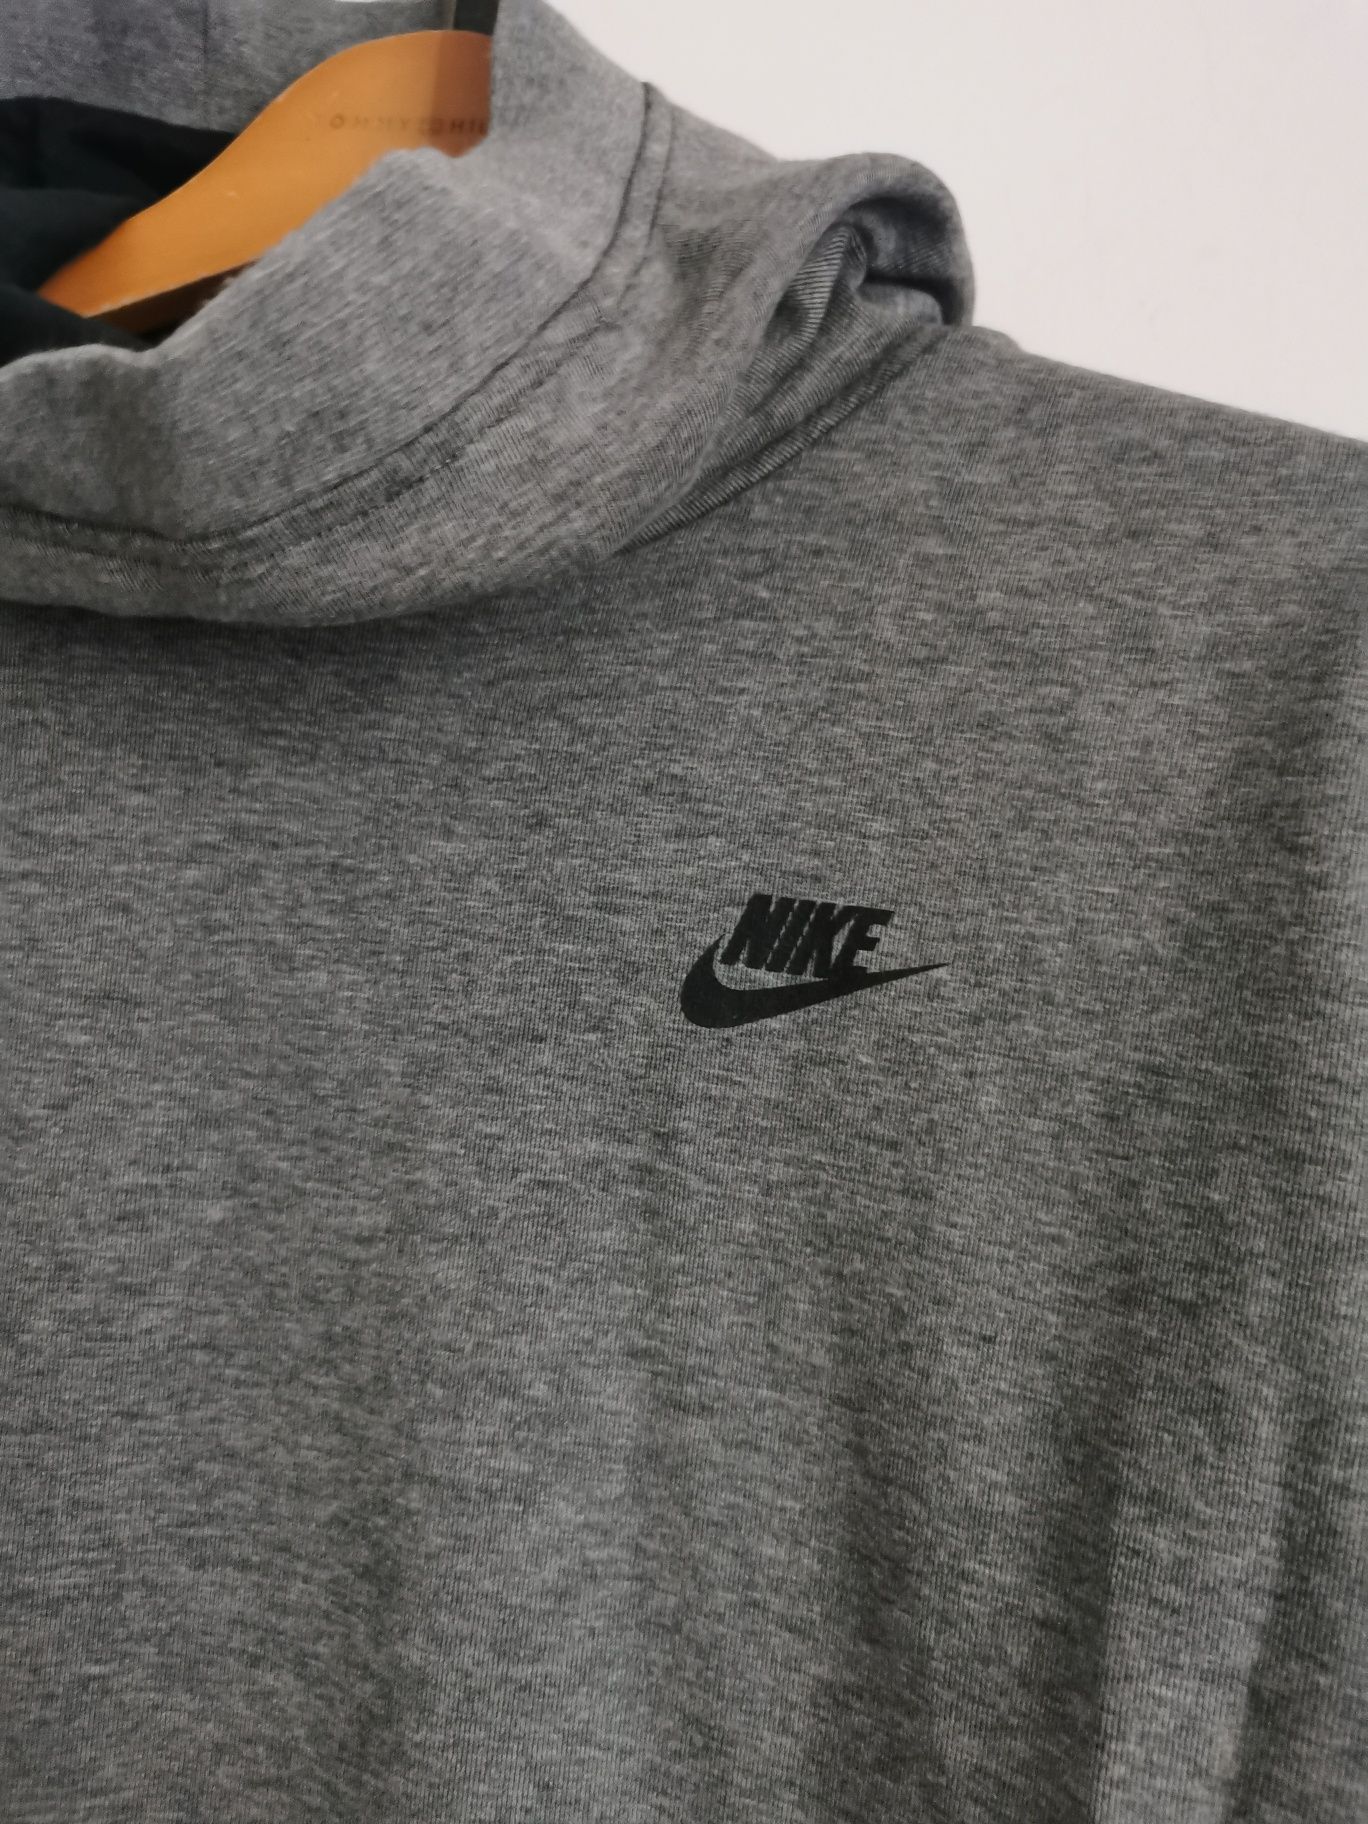 Nike bluza sportowa damska logowana bawełna S/M